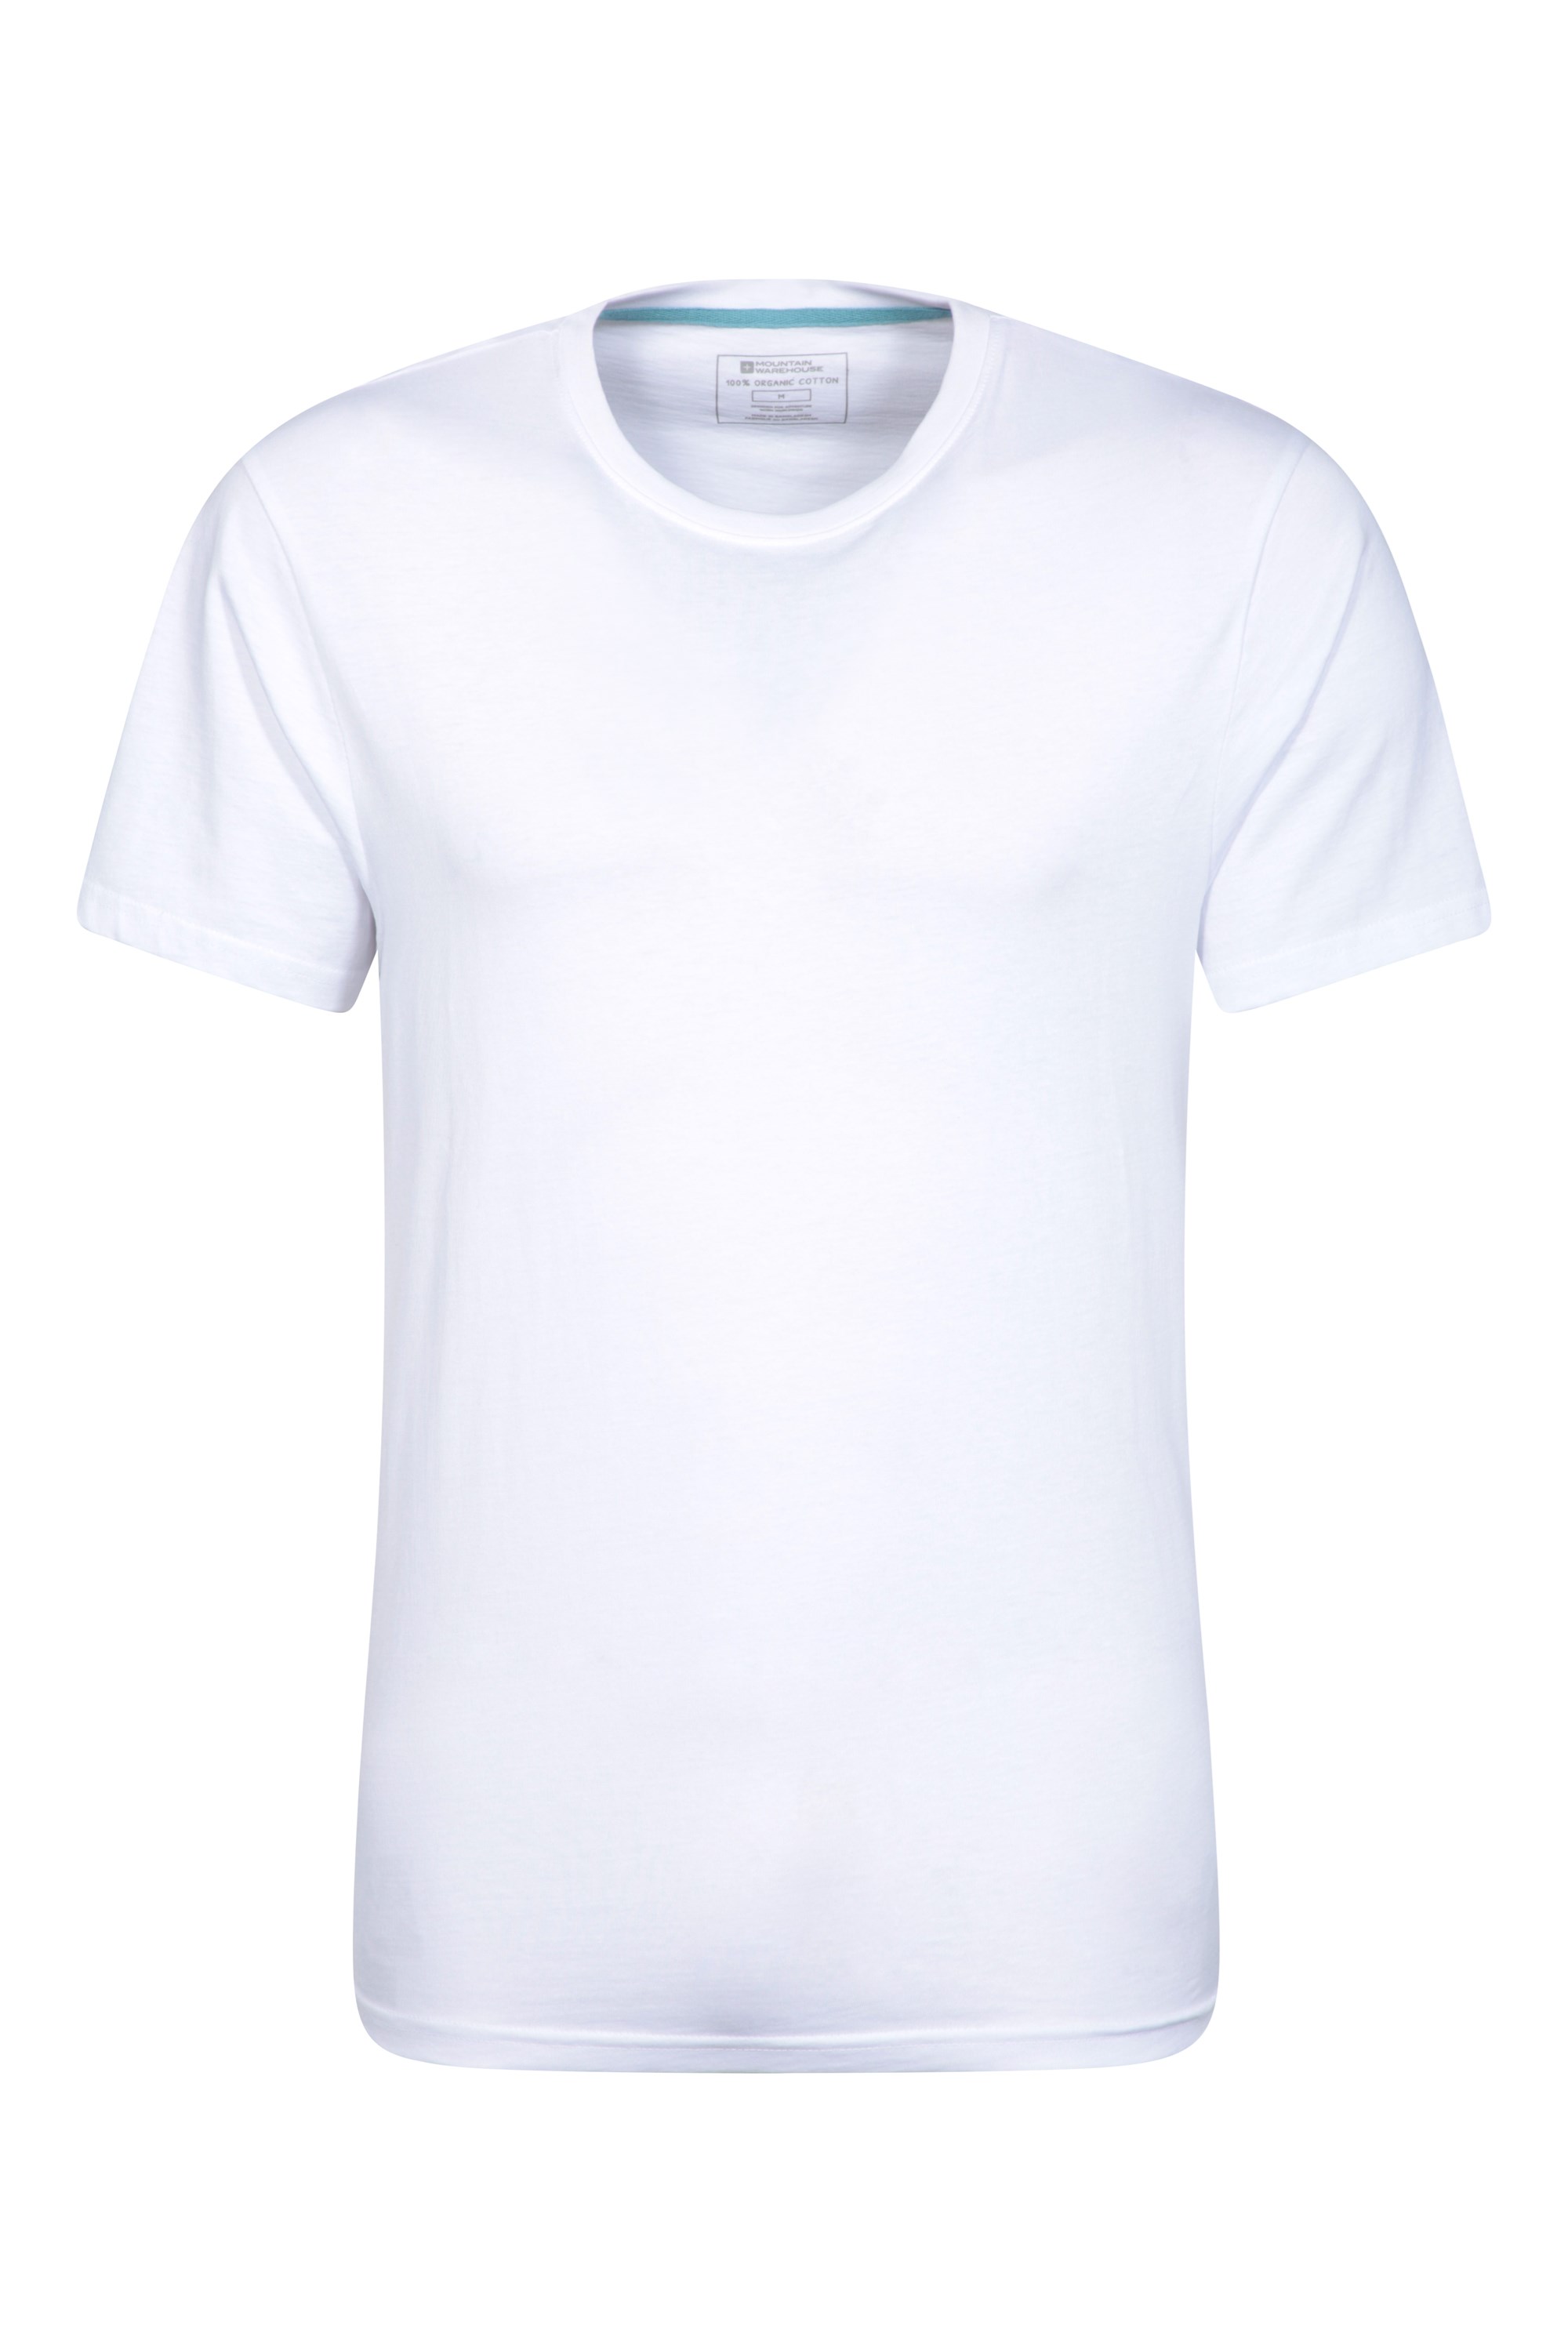 Eden Ii Mens Organic T-Shirt - White